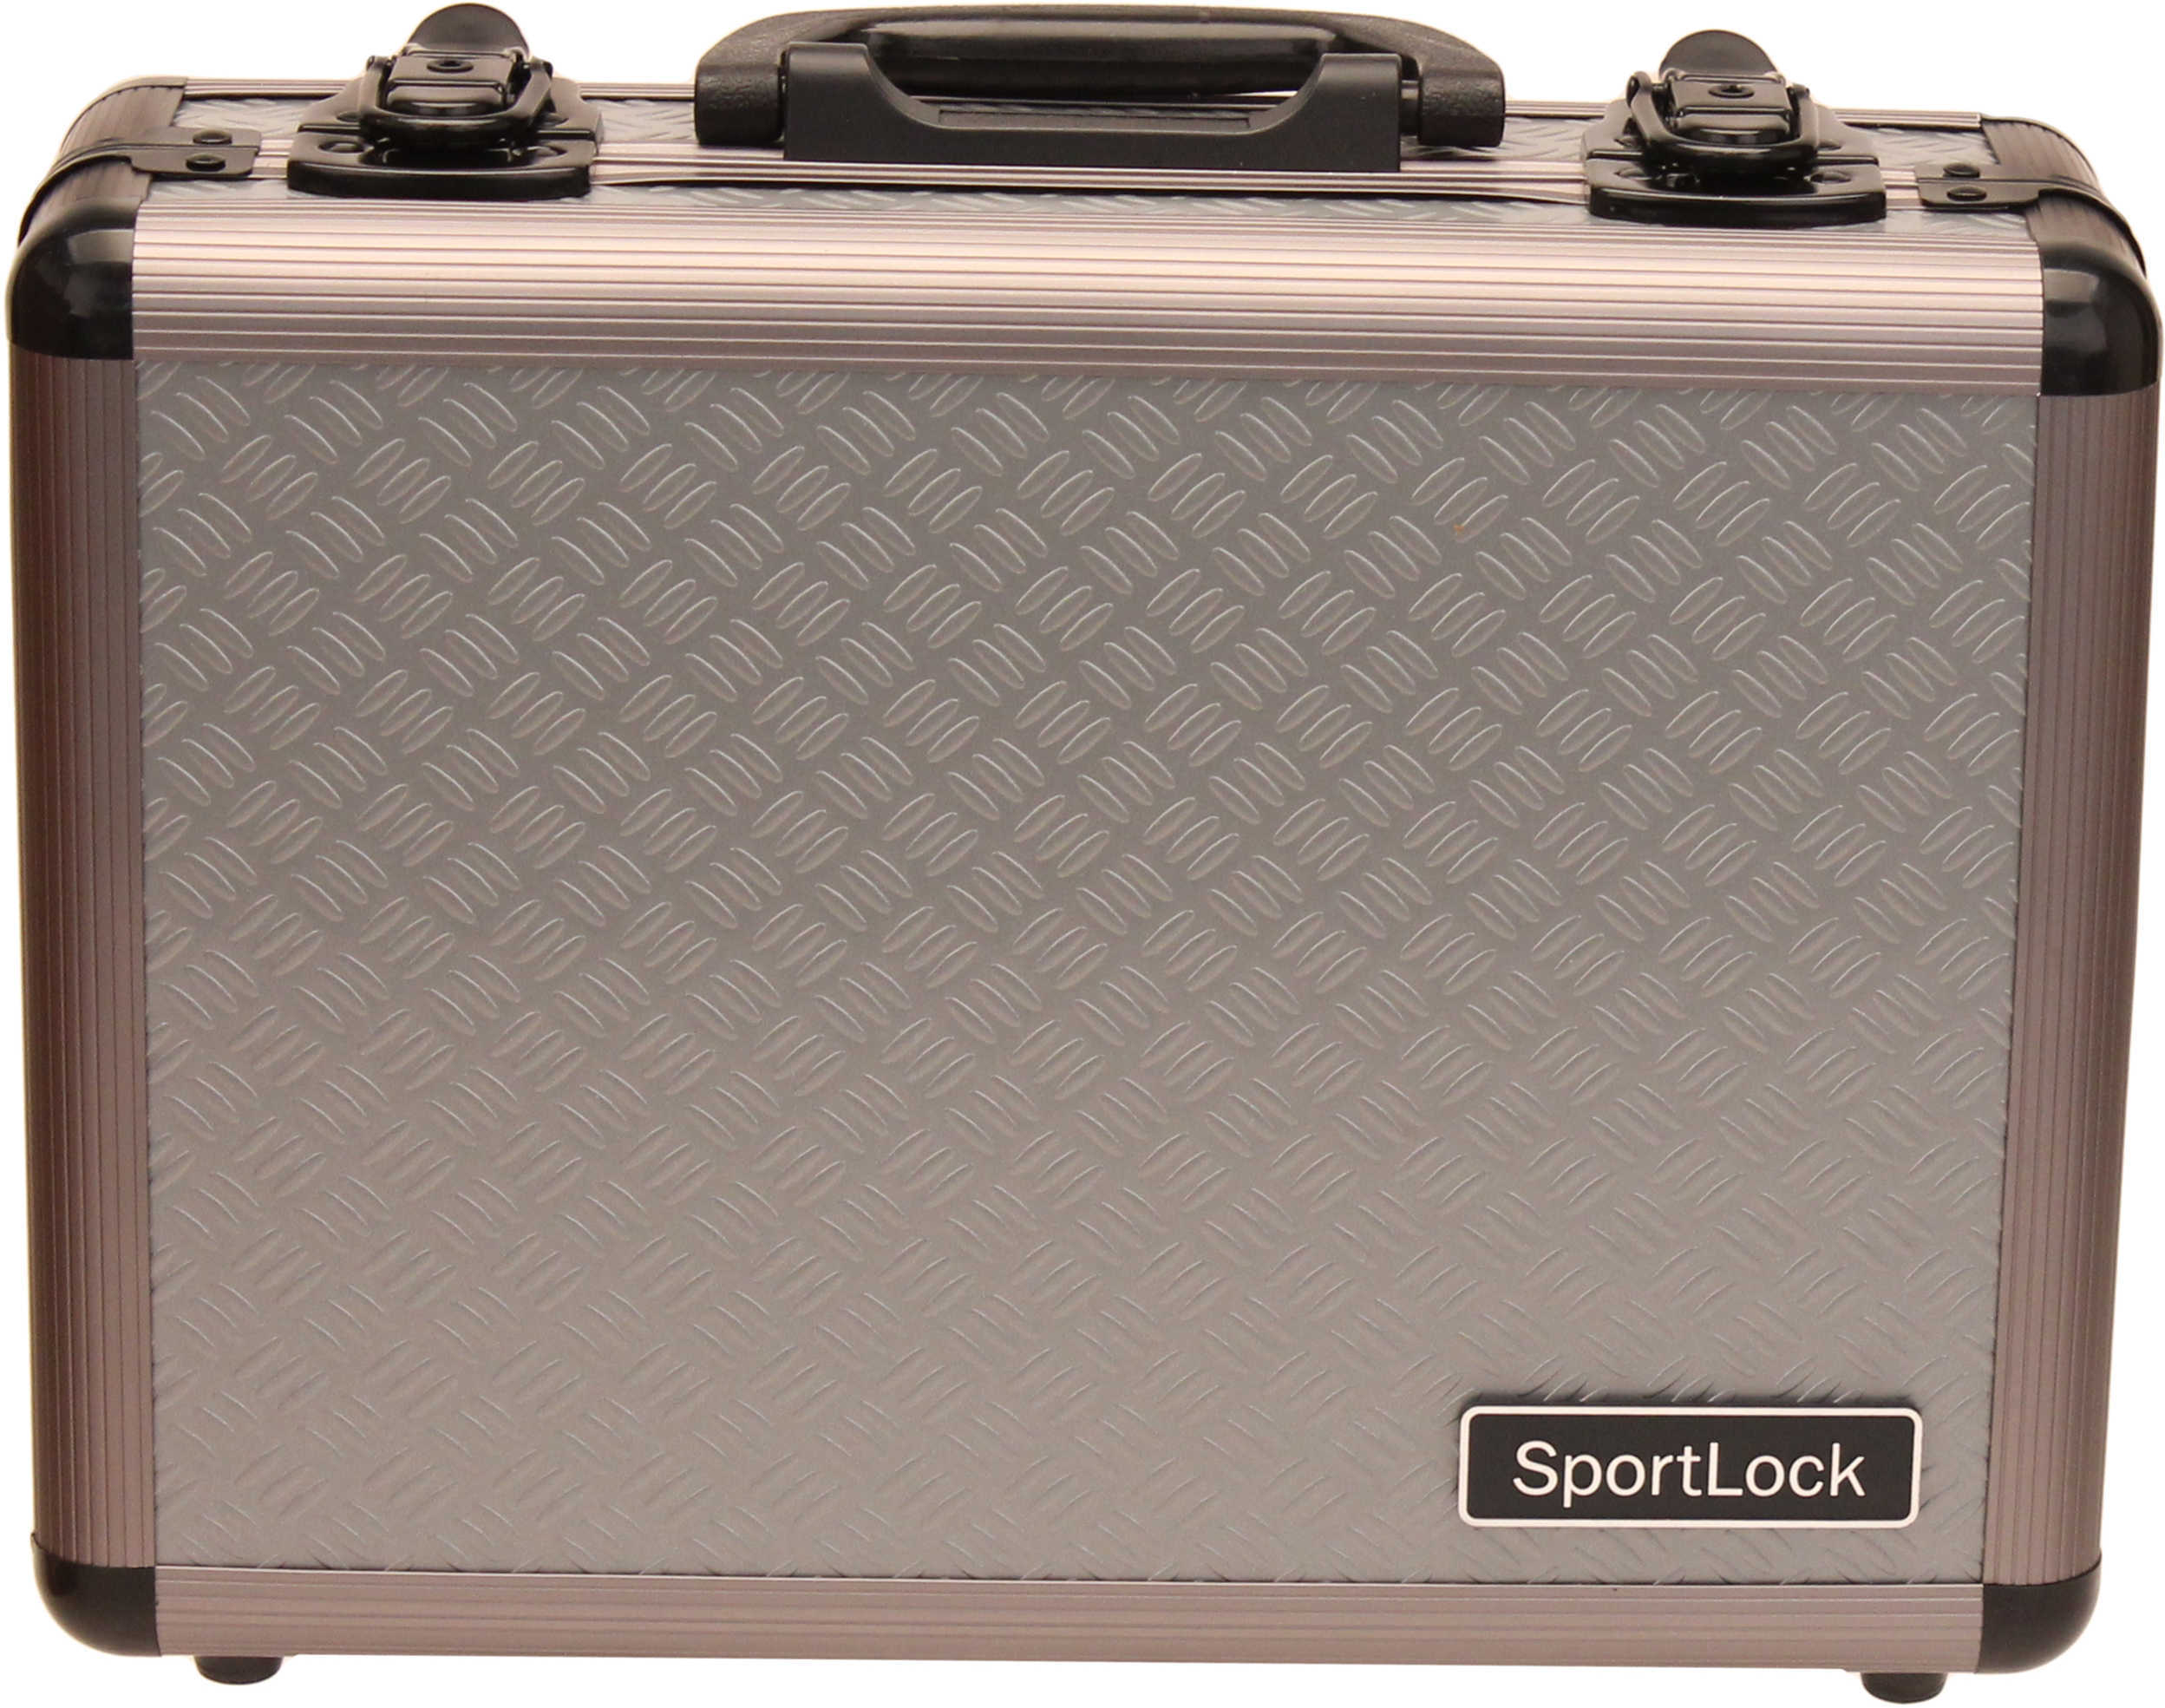 Sportlock ALUMALOCK Double Handgun Grey